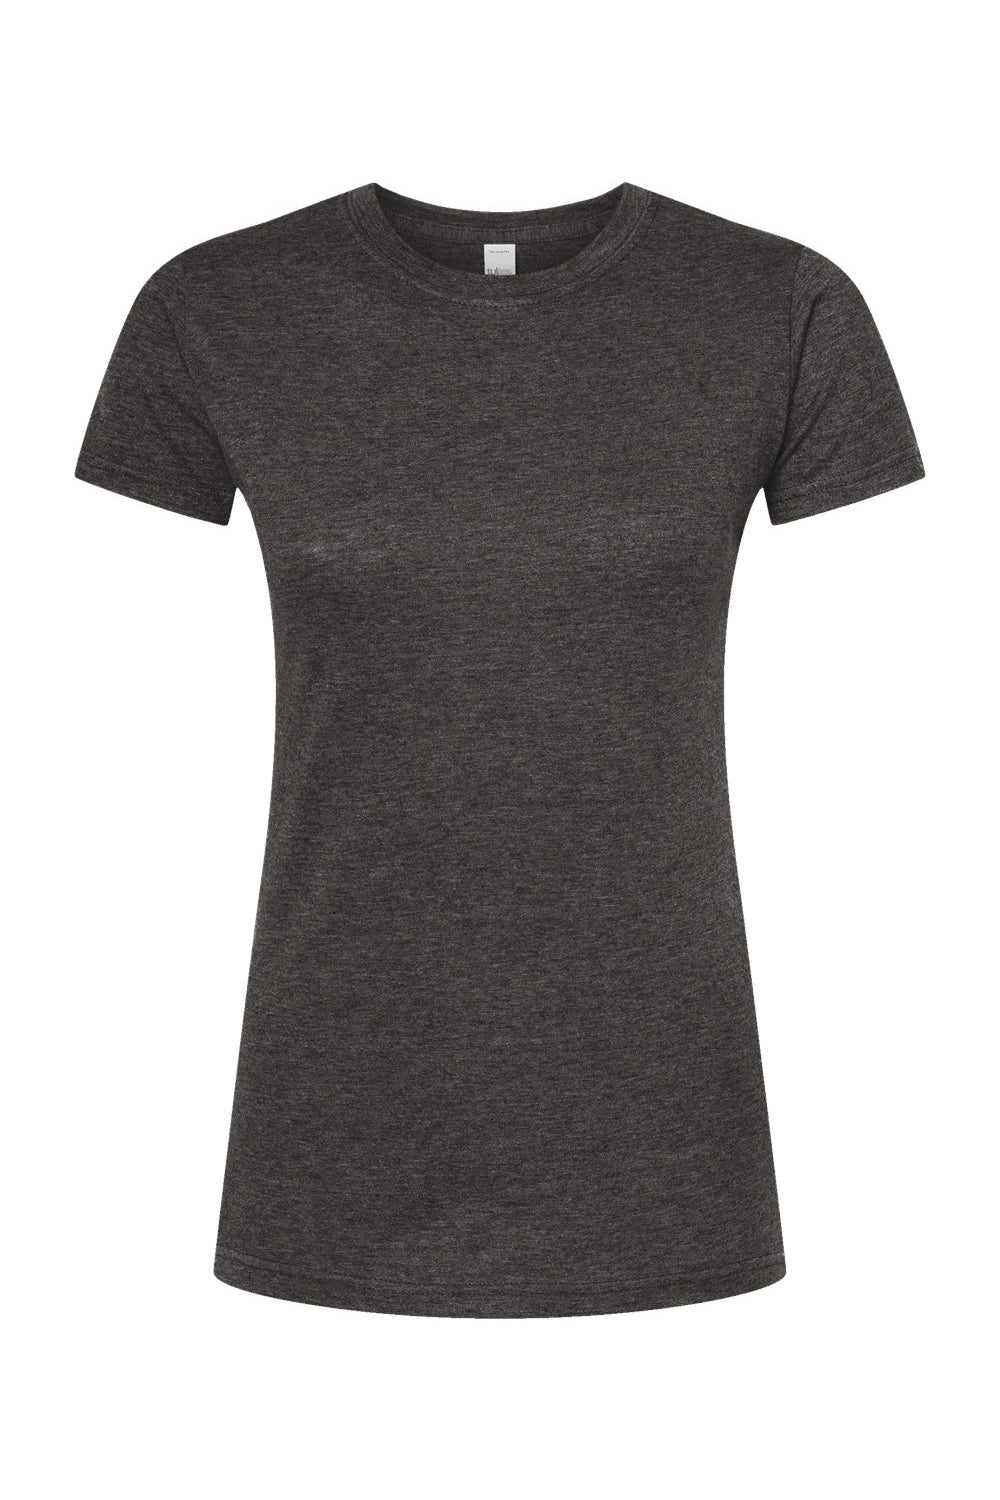 Tultex 240 Womens Poly-Rich Short Sleeve Crewneck T-Shirt Heather Graphite Grey Flat Front